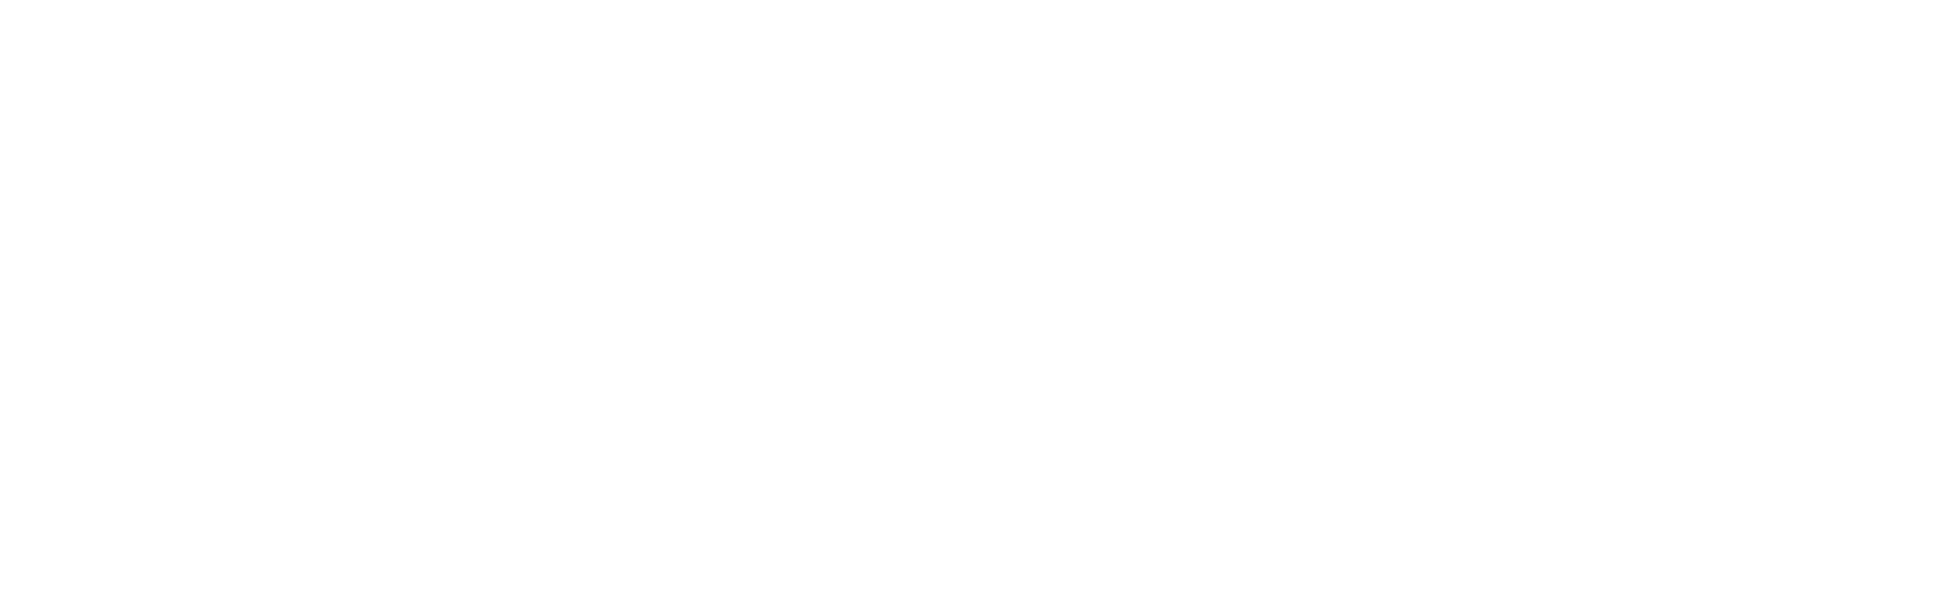 Harvest Baptist Church